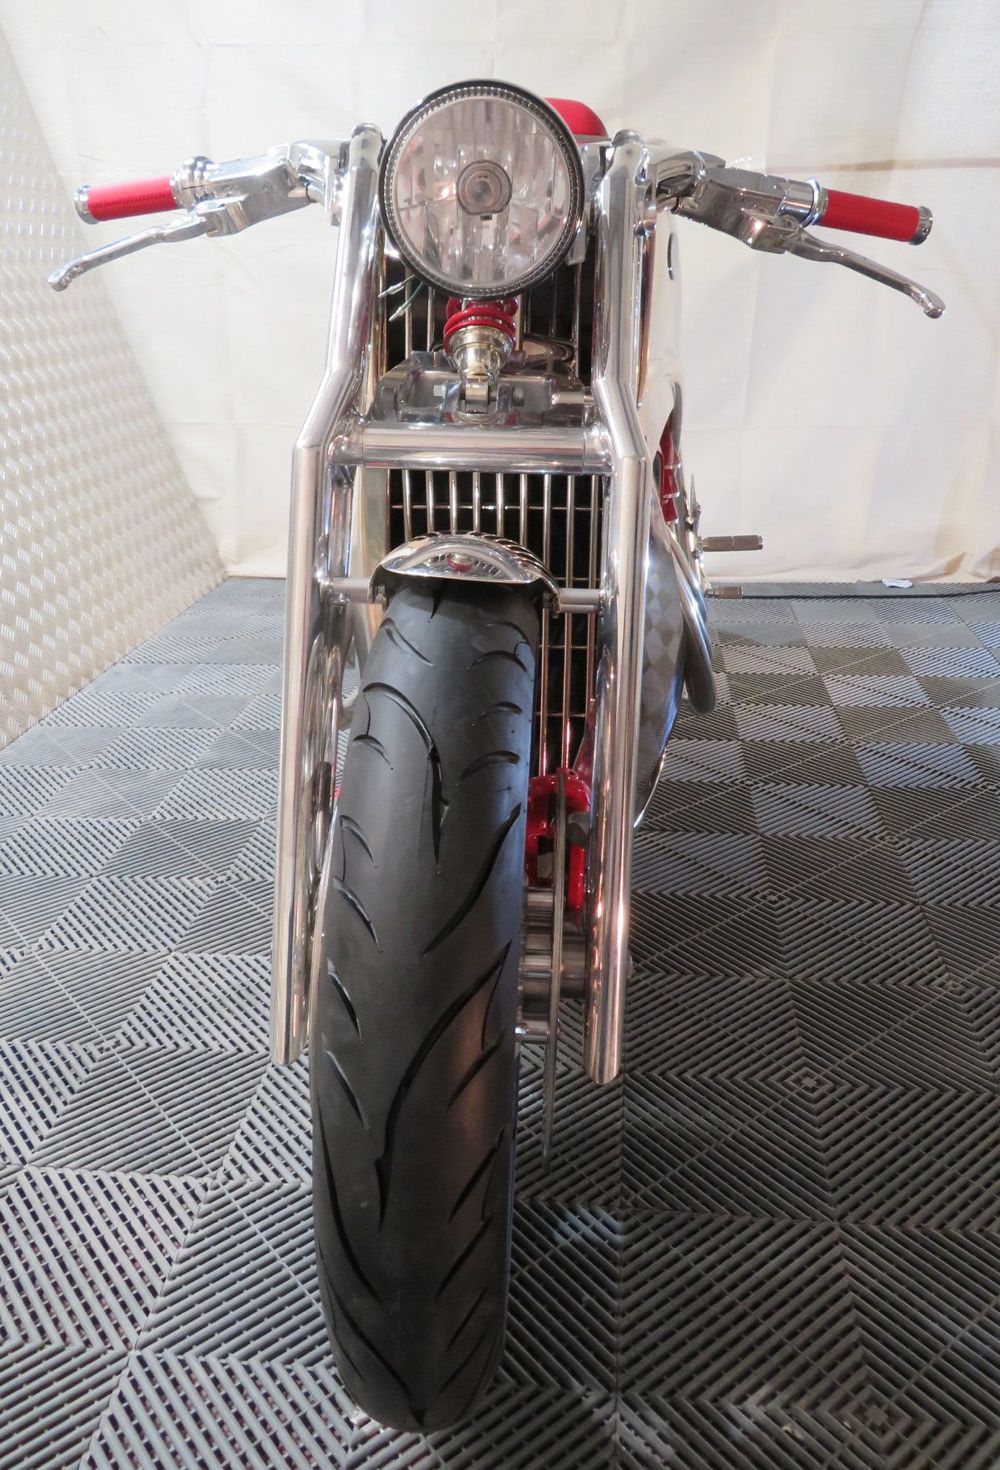 2019 Levis Motorcycles V6 Cafe-Racer concept